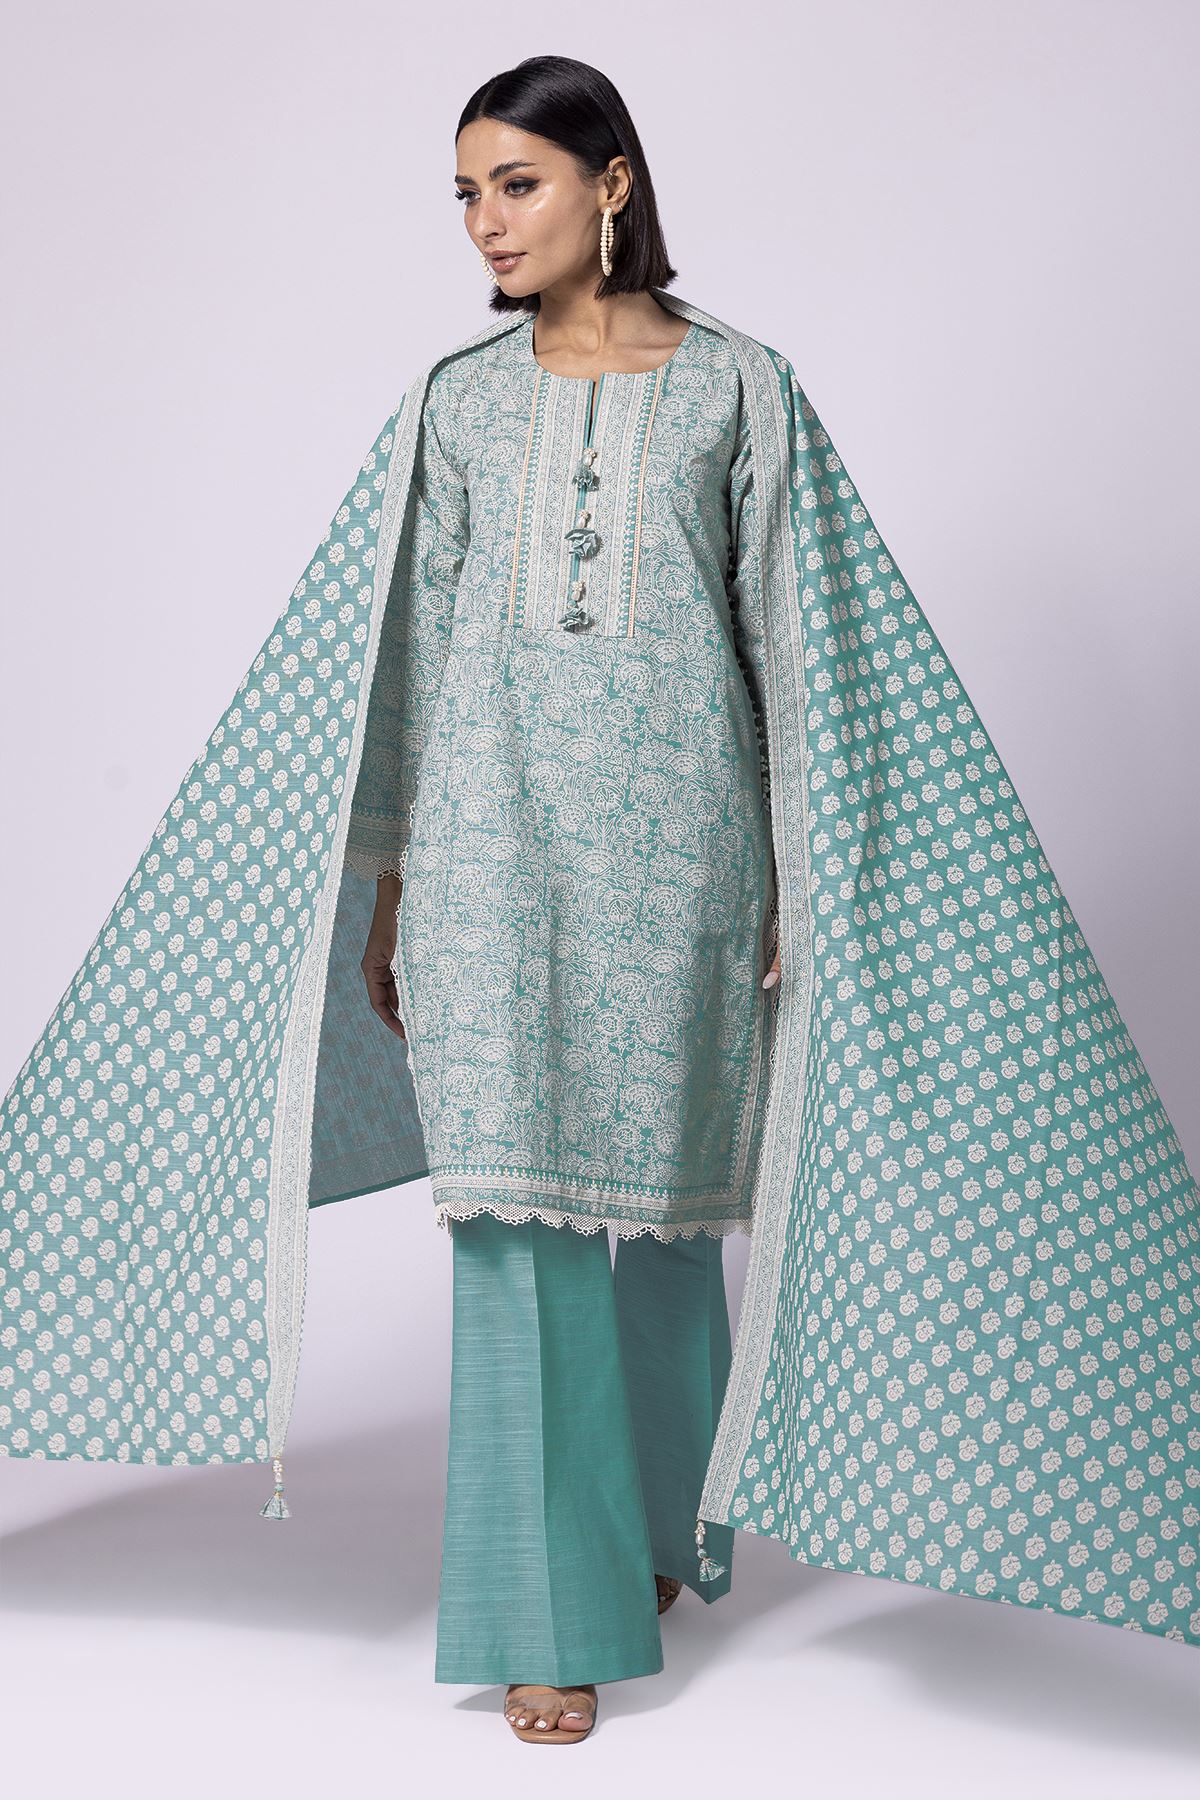 Buy Fabrics 3 Piece Suit | 14.40 USD | 1001740904 | Khaadi Global